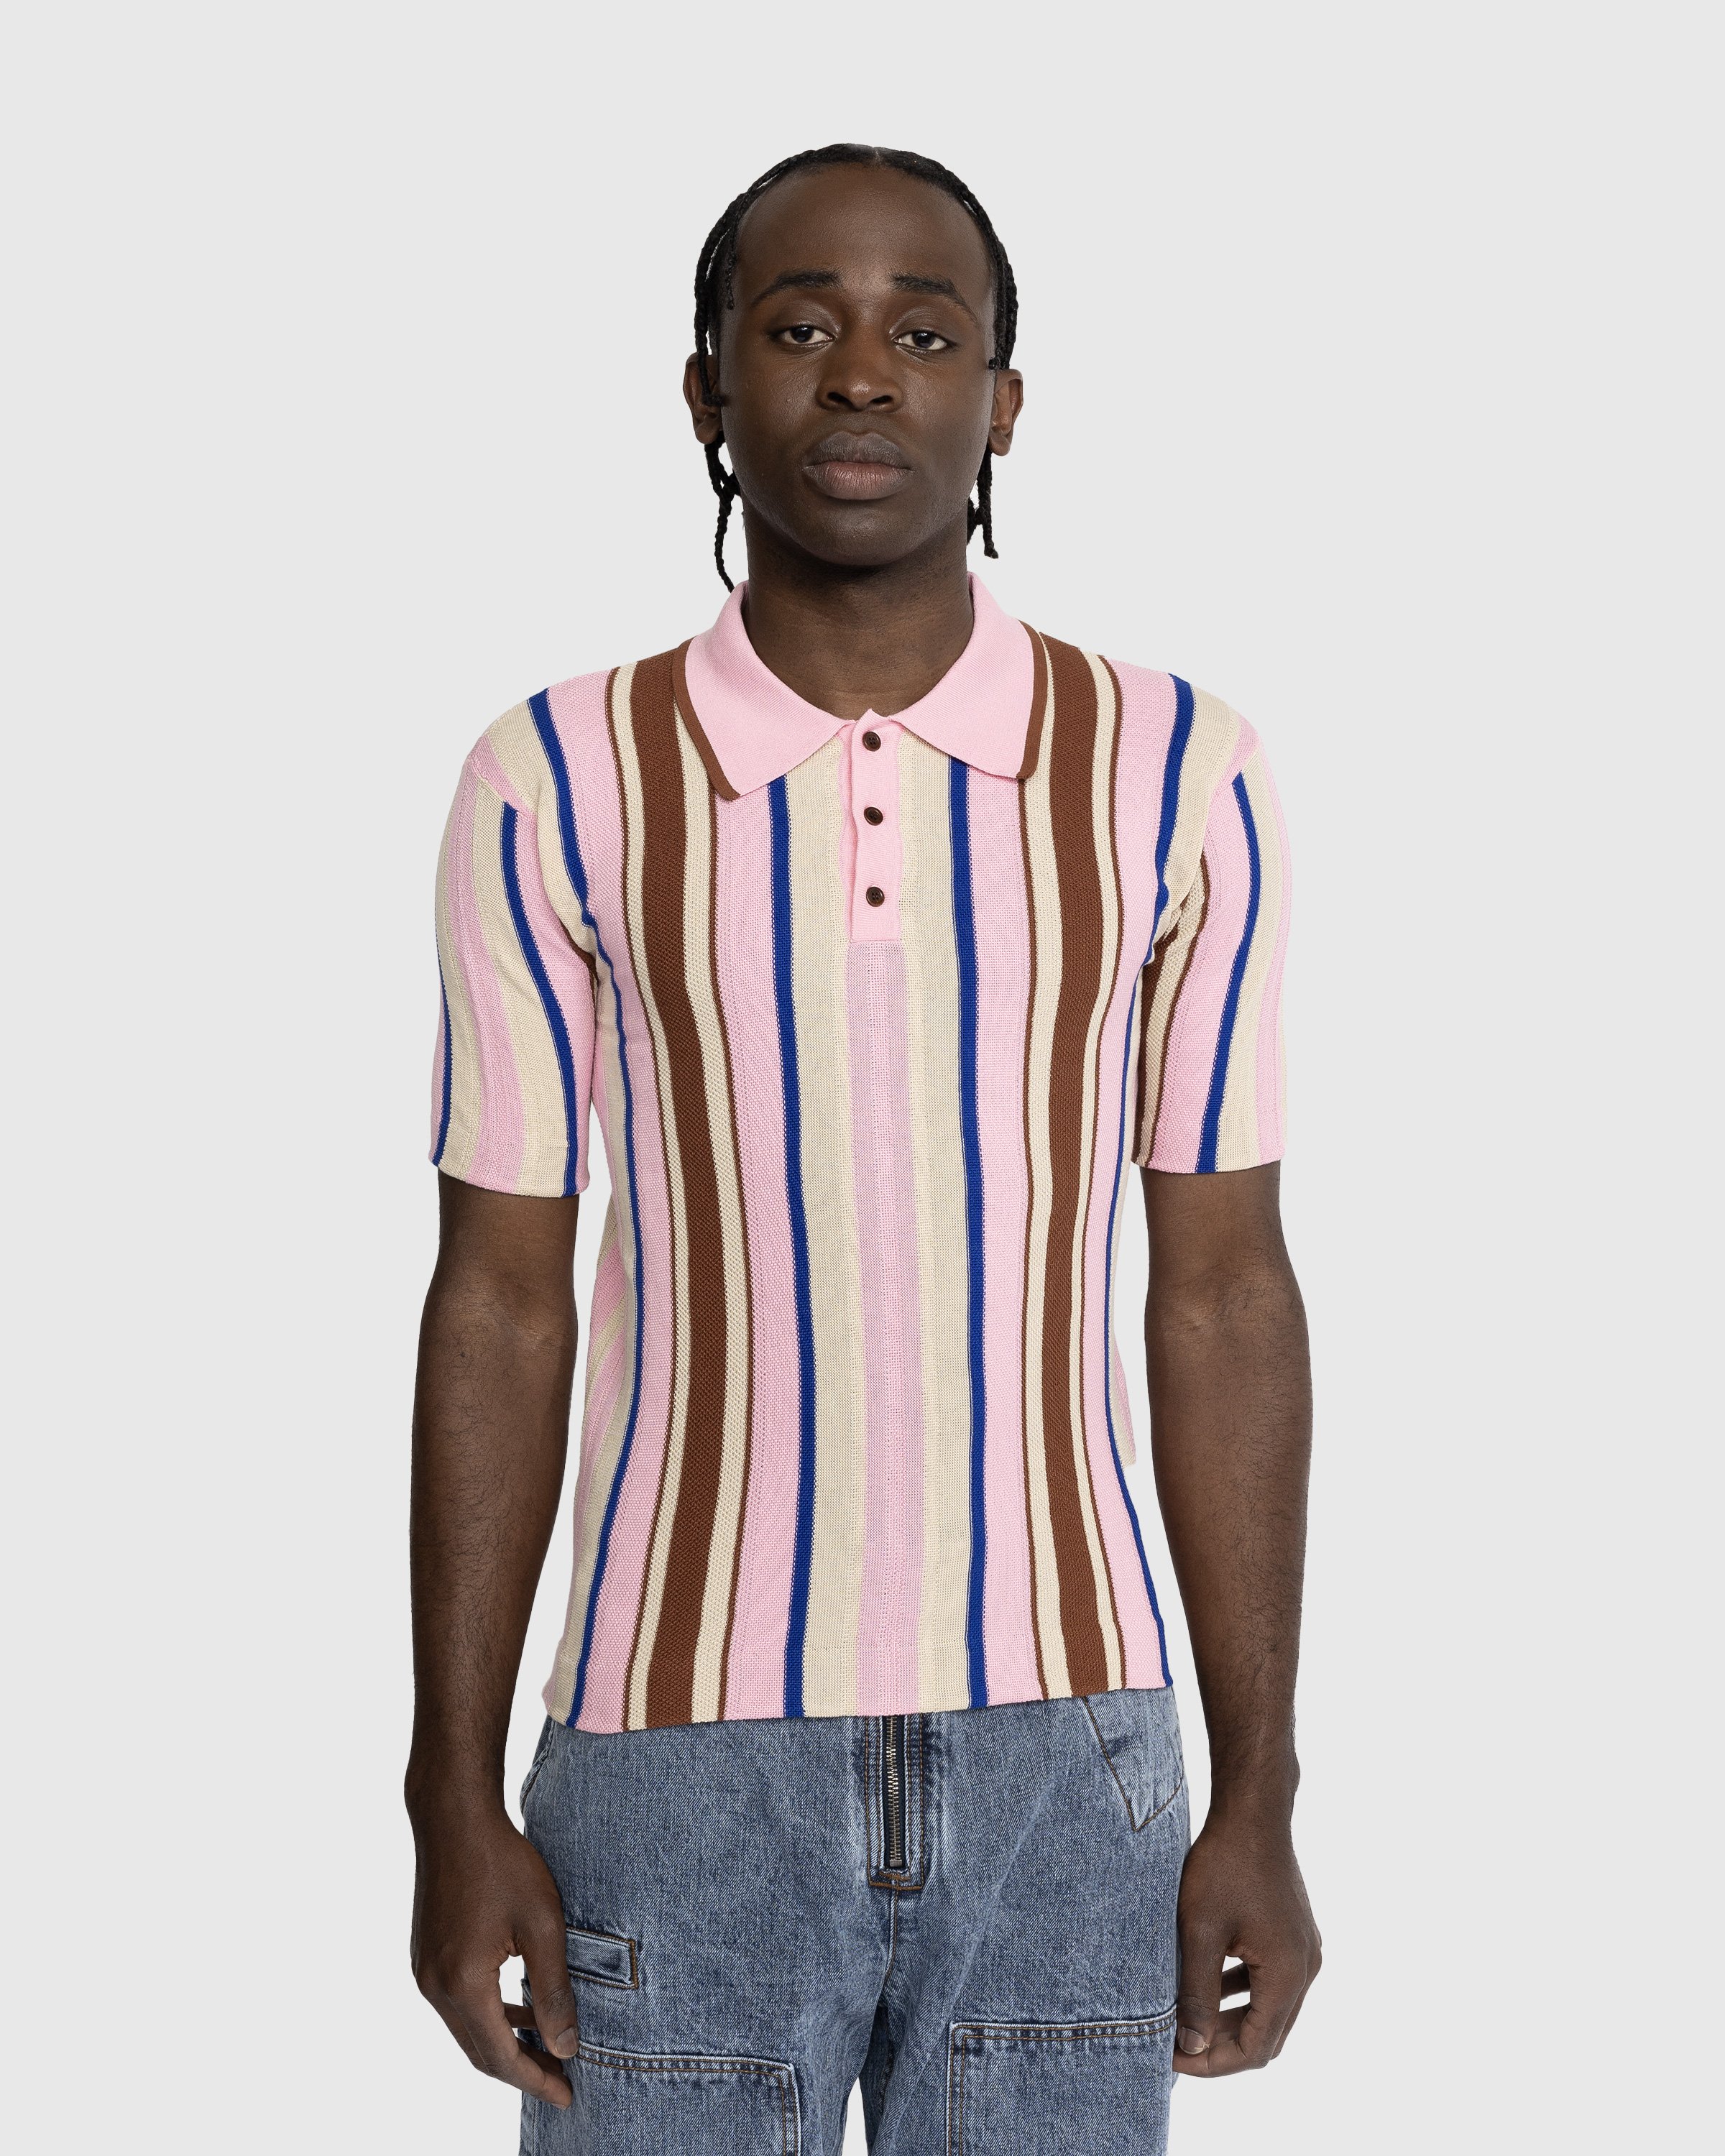 Wales Bonner - Optimist Polo Shirt - Clothing - Pink - Image 2